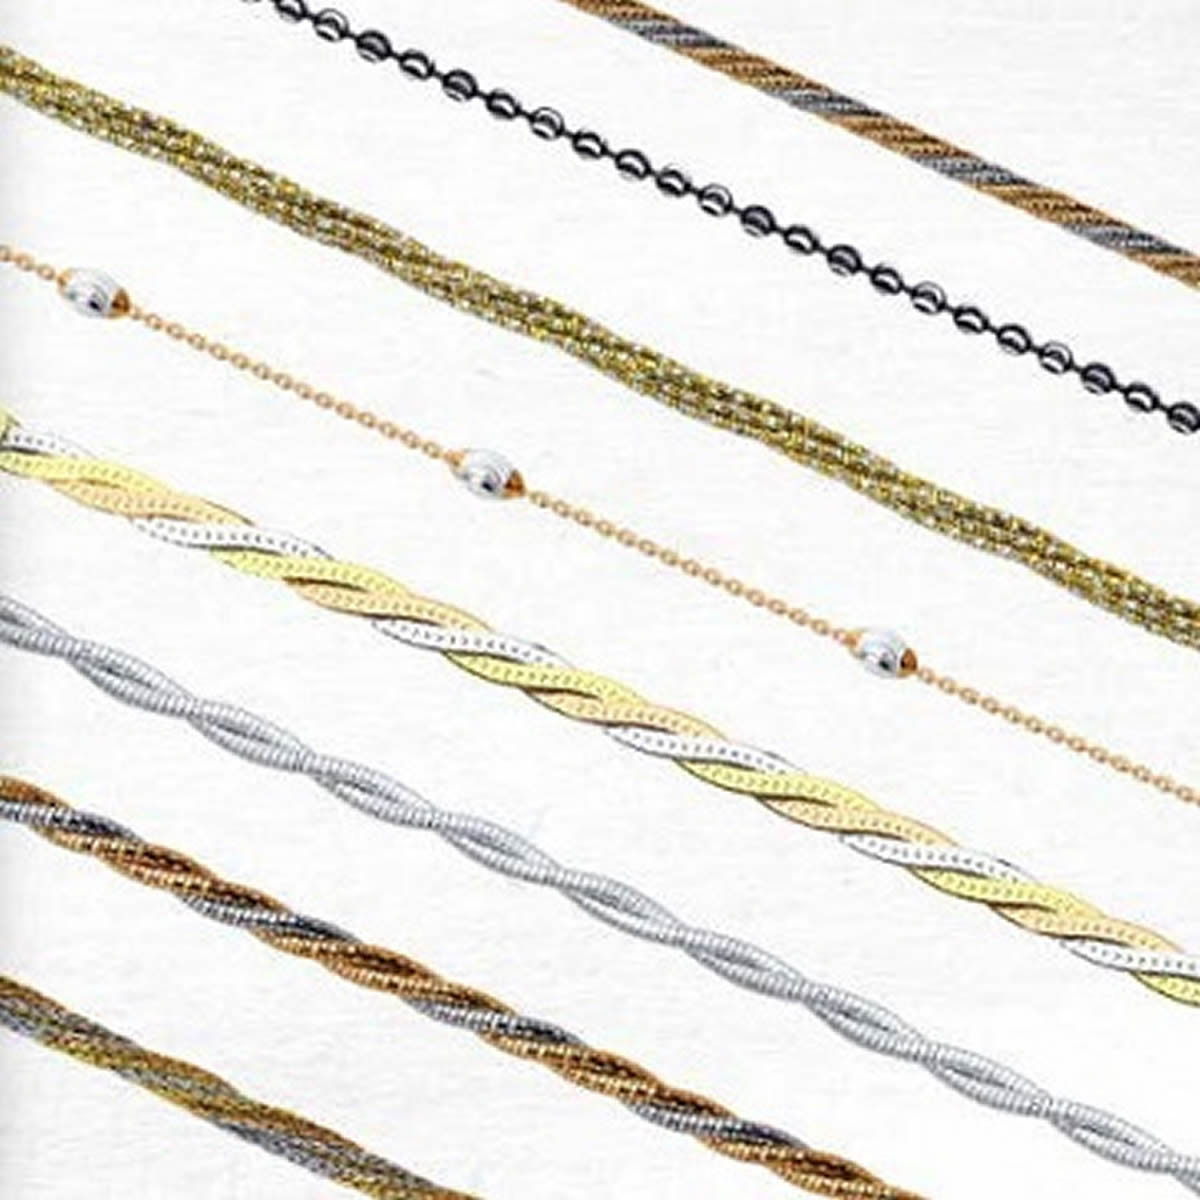 разновидности плетения золотых цепочек фото с названиями